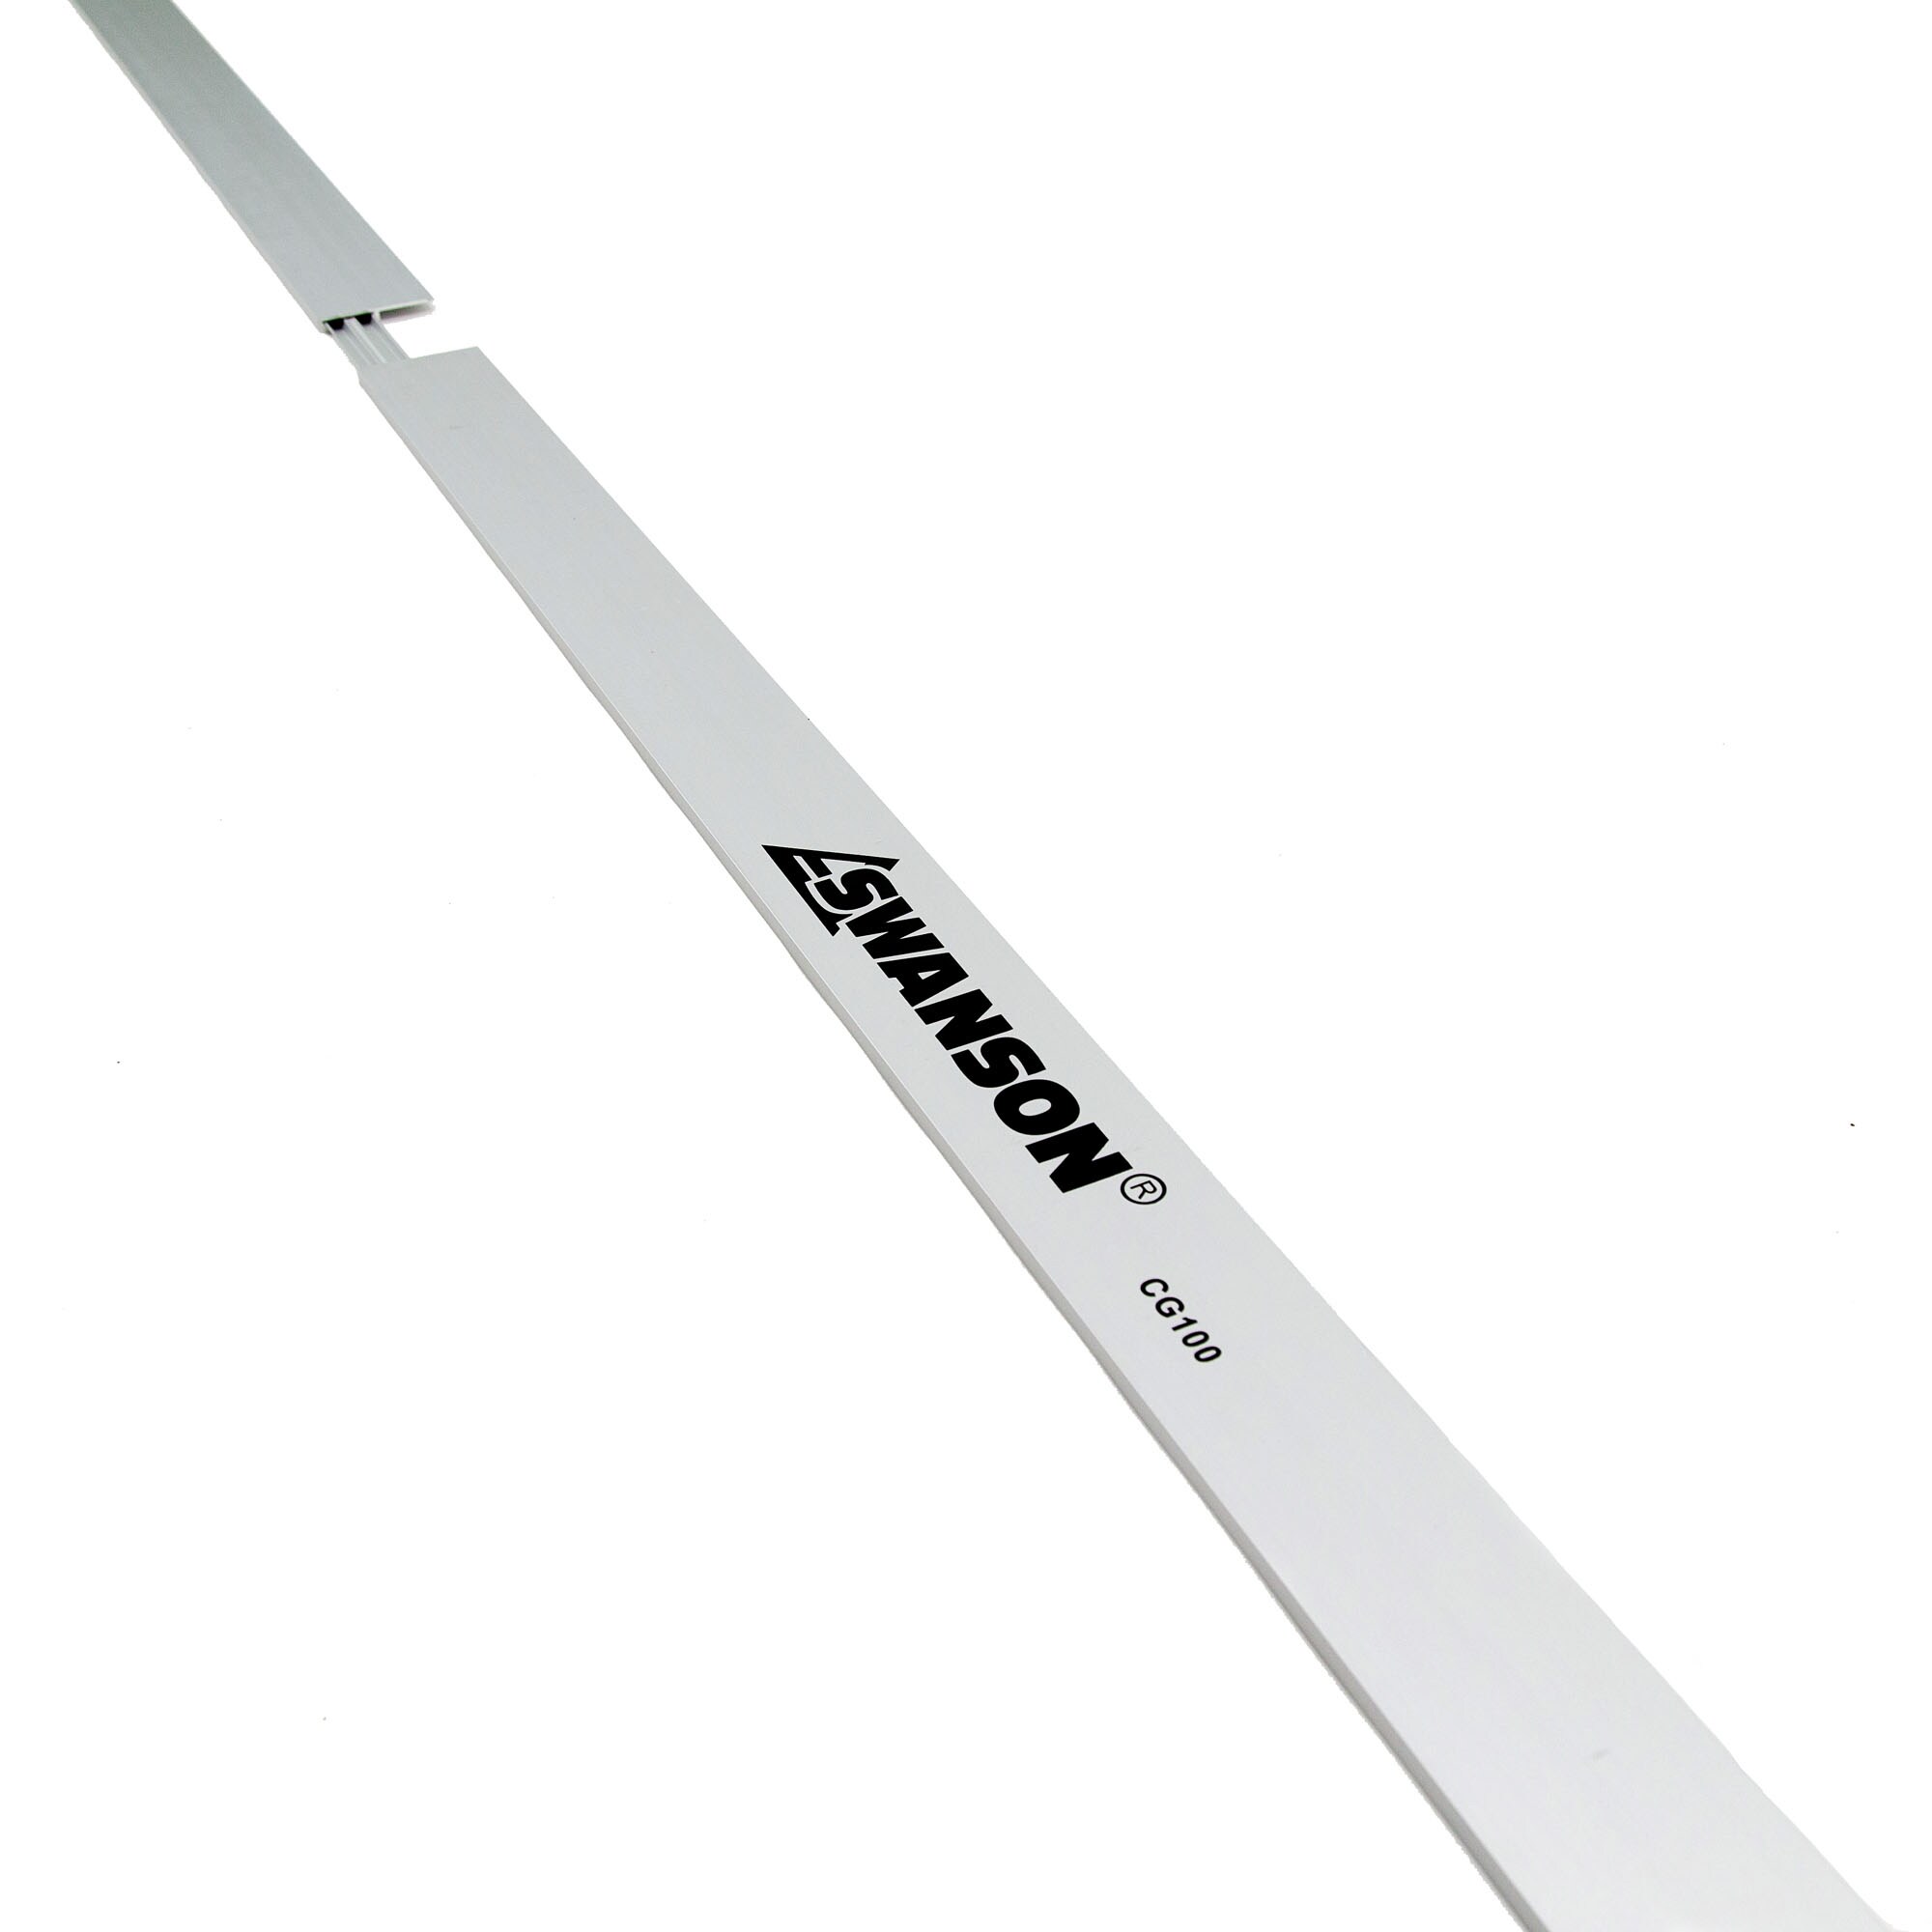 Swanson Tool Company 3-ft Metal Ruler in the Yardsticks & Rulers